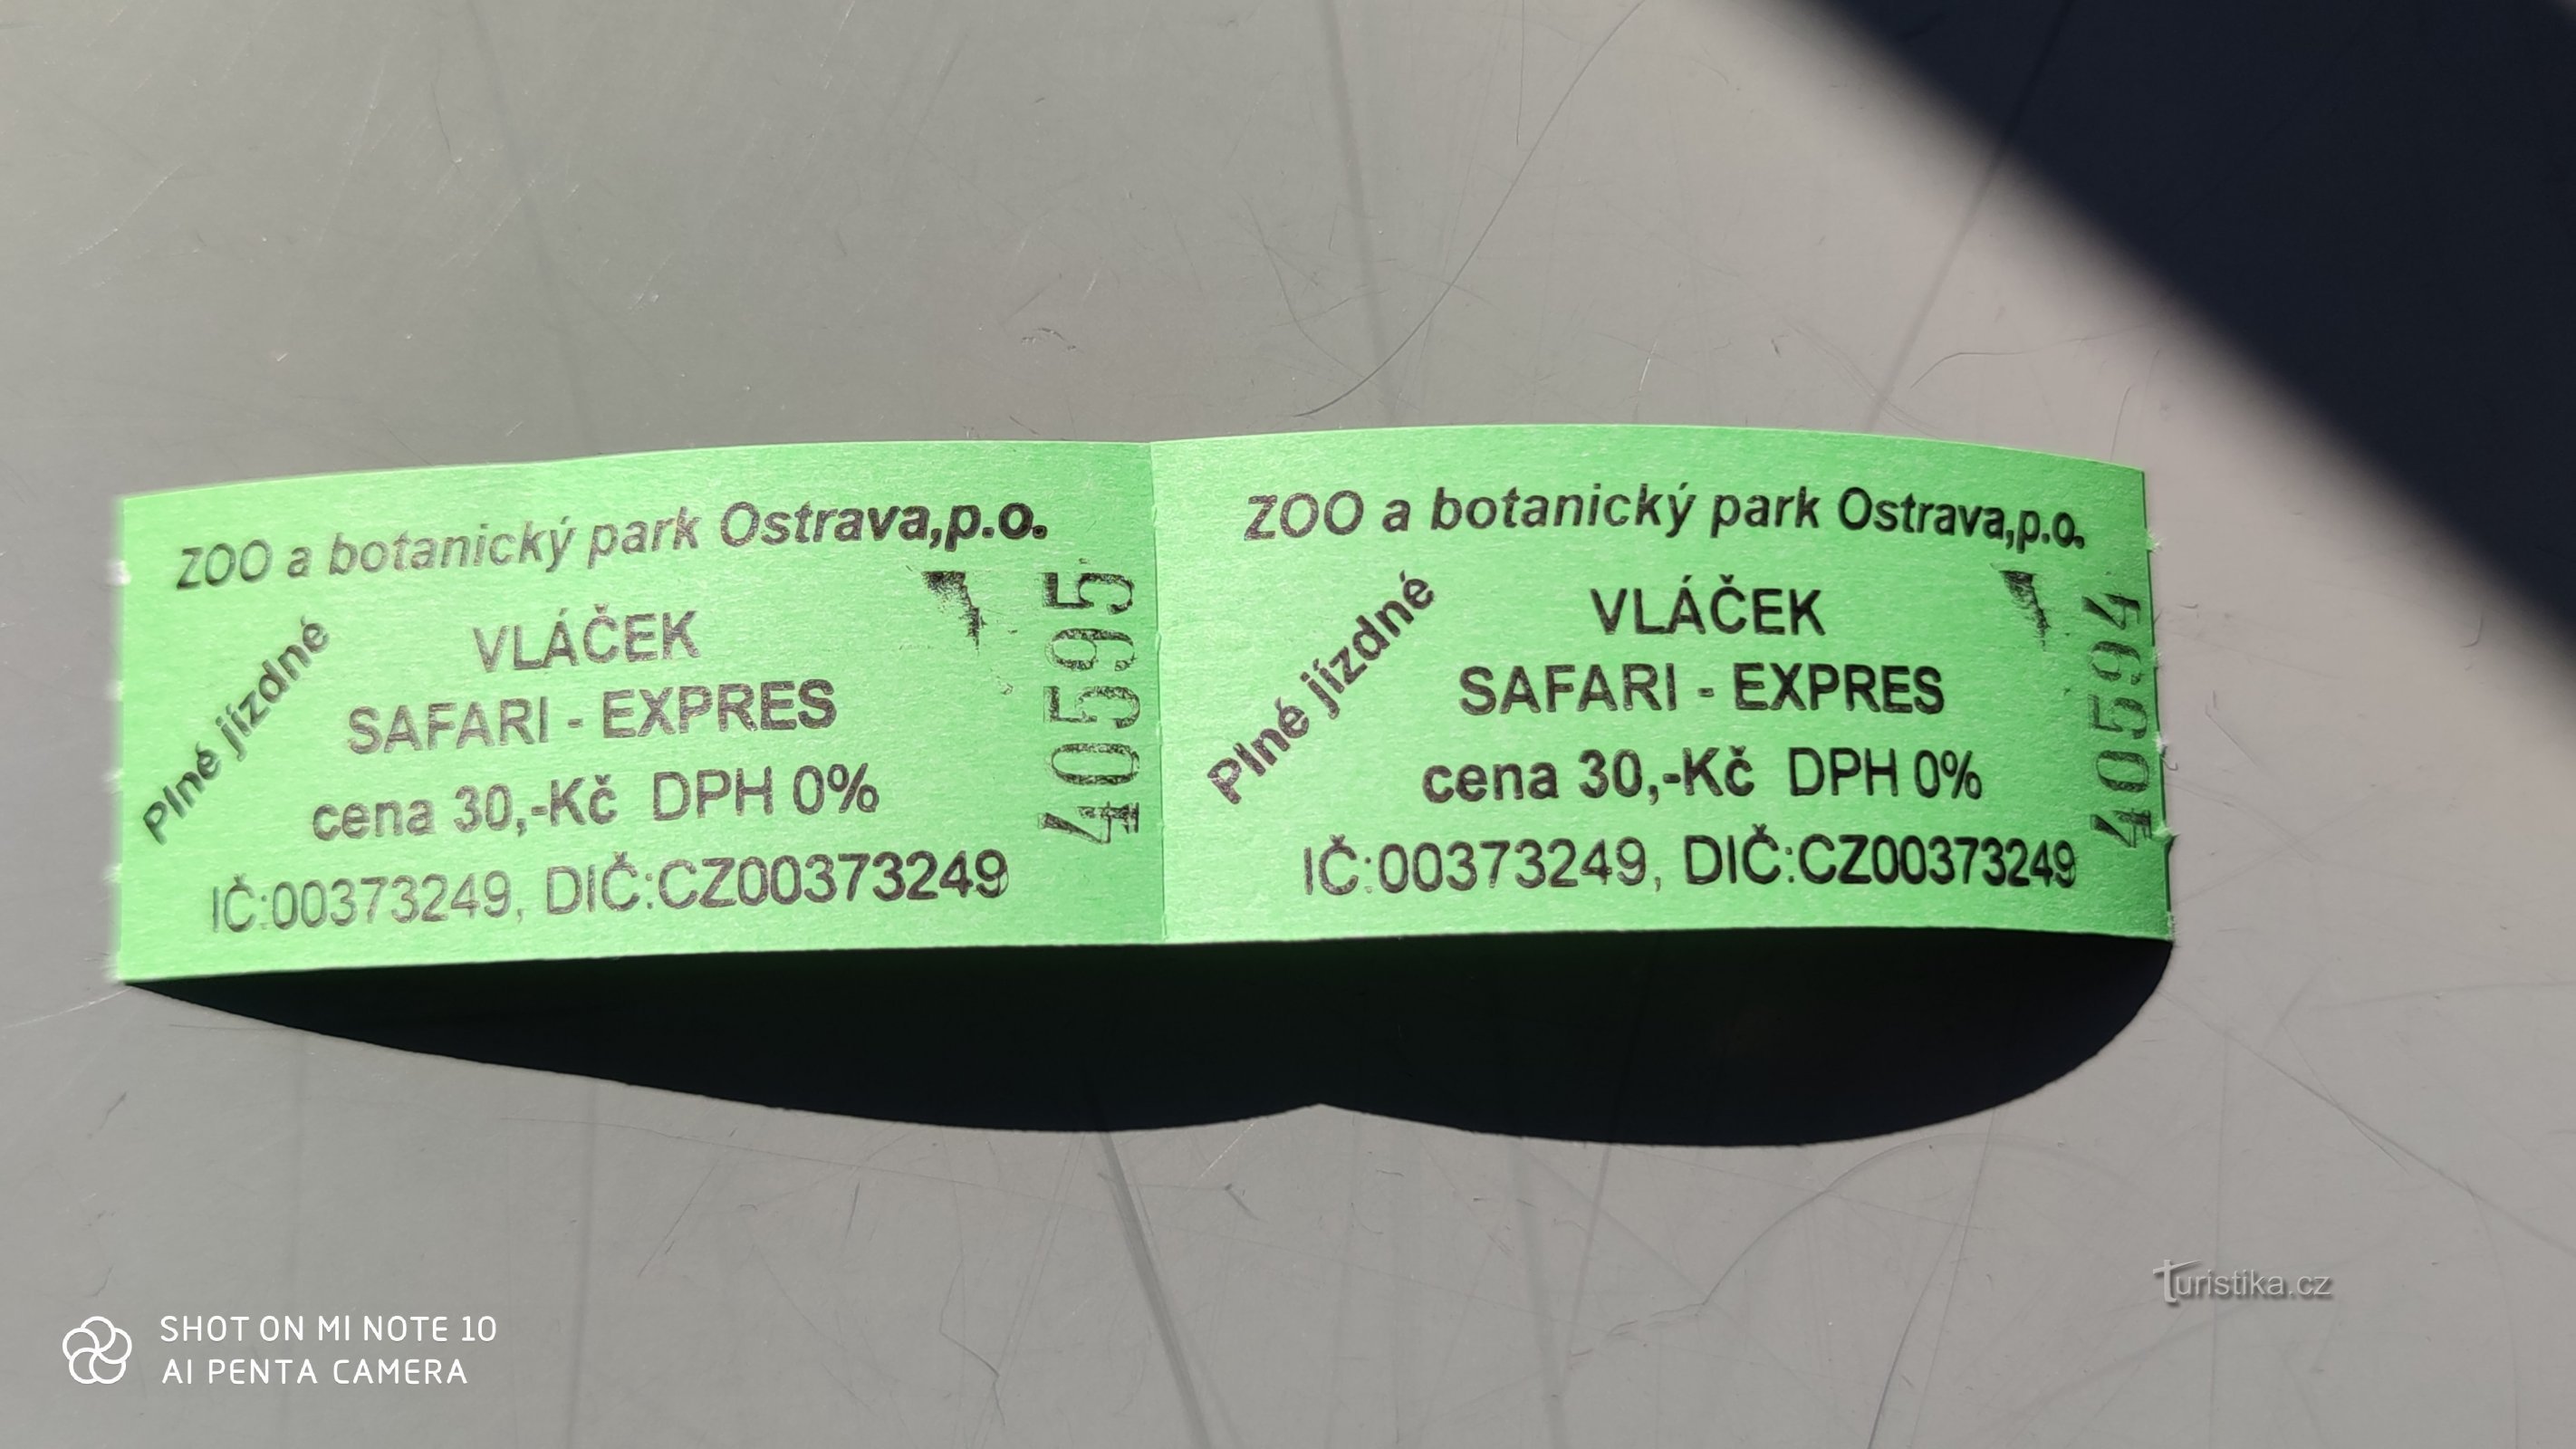 Safari Express i Ostrava Zoo